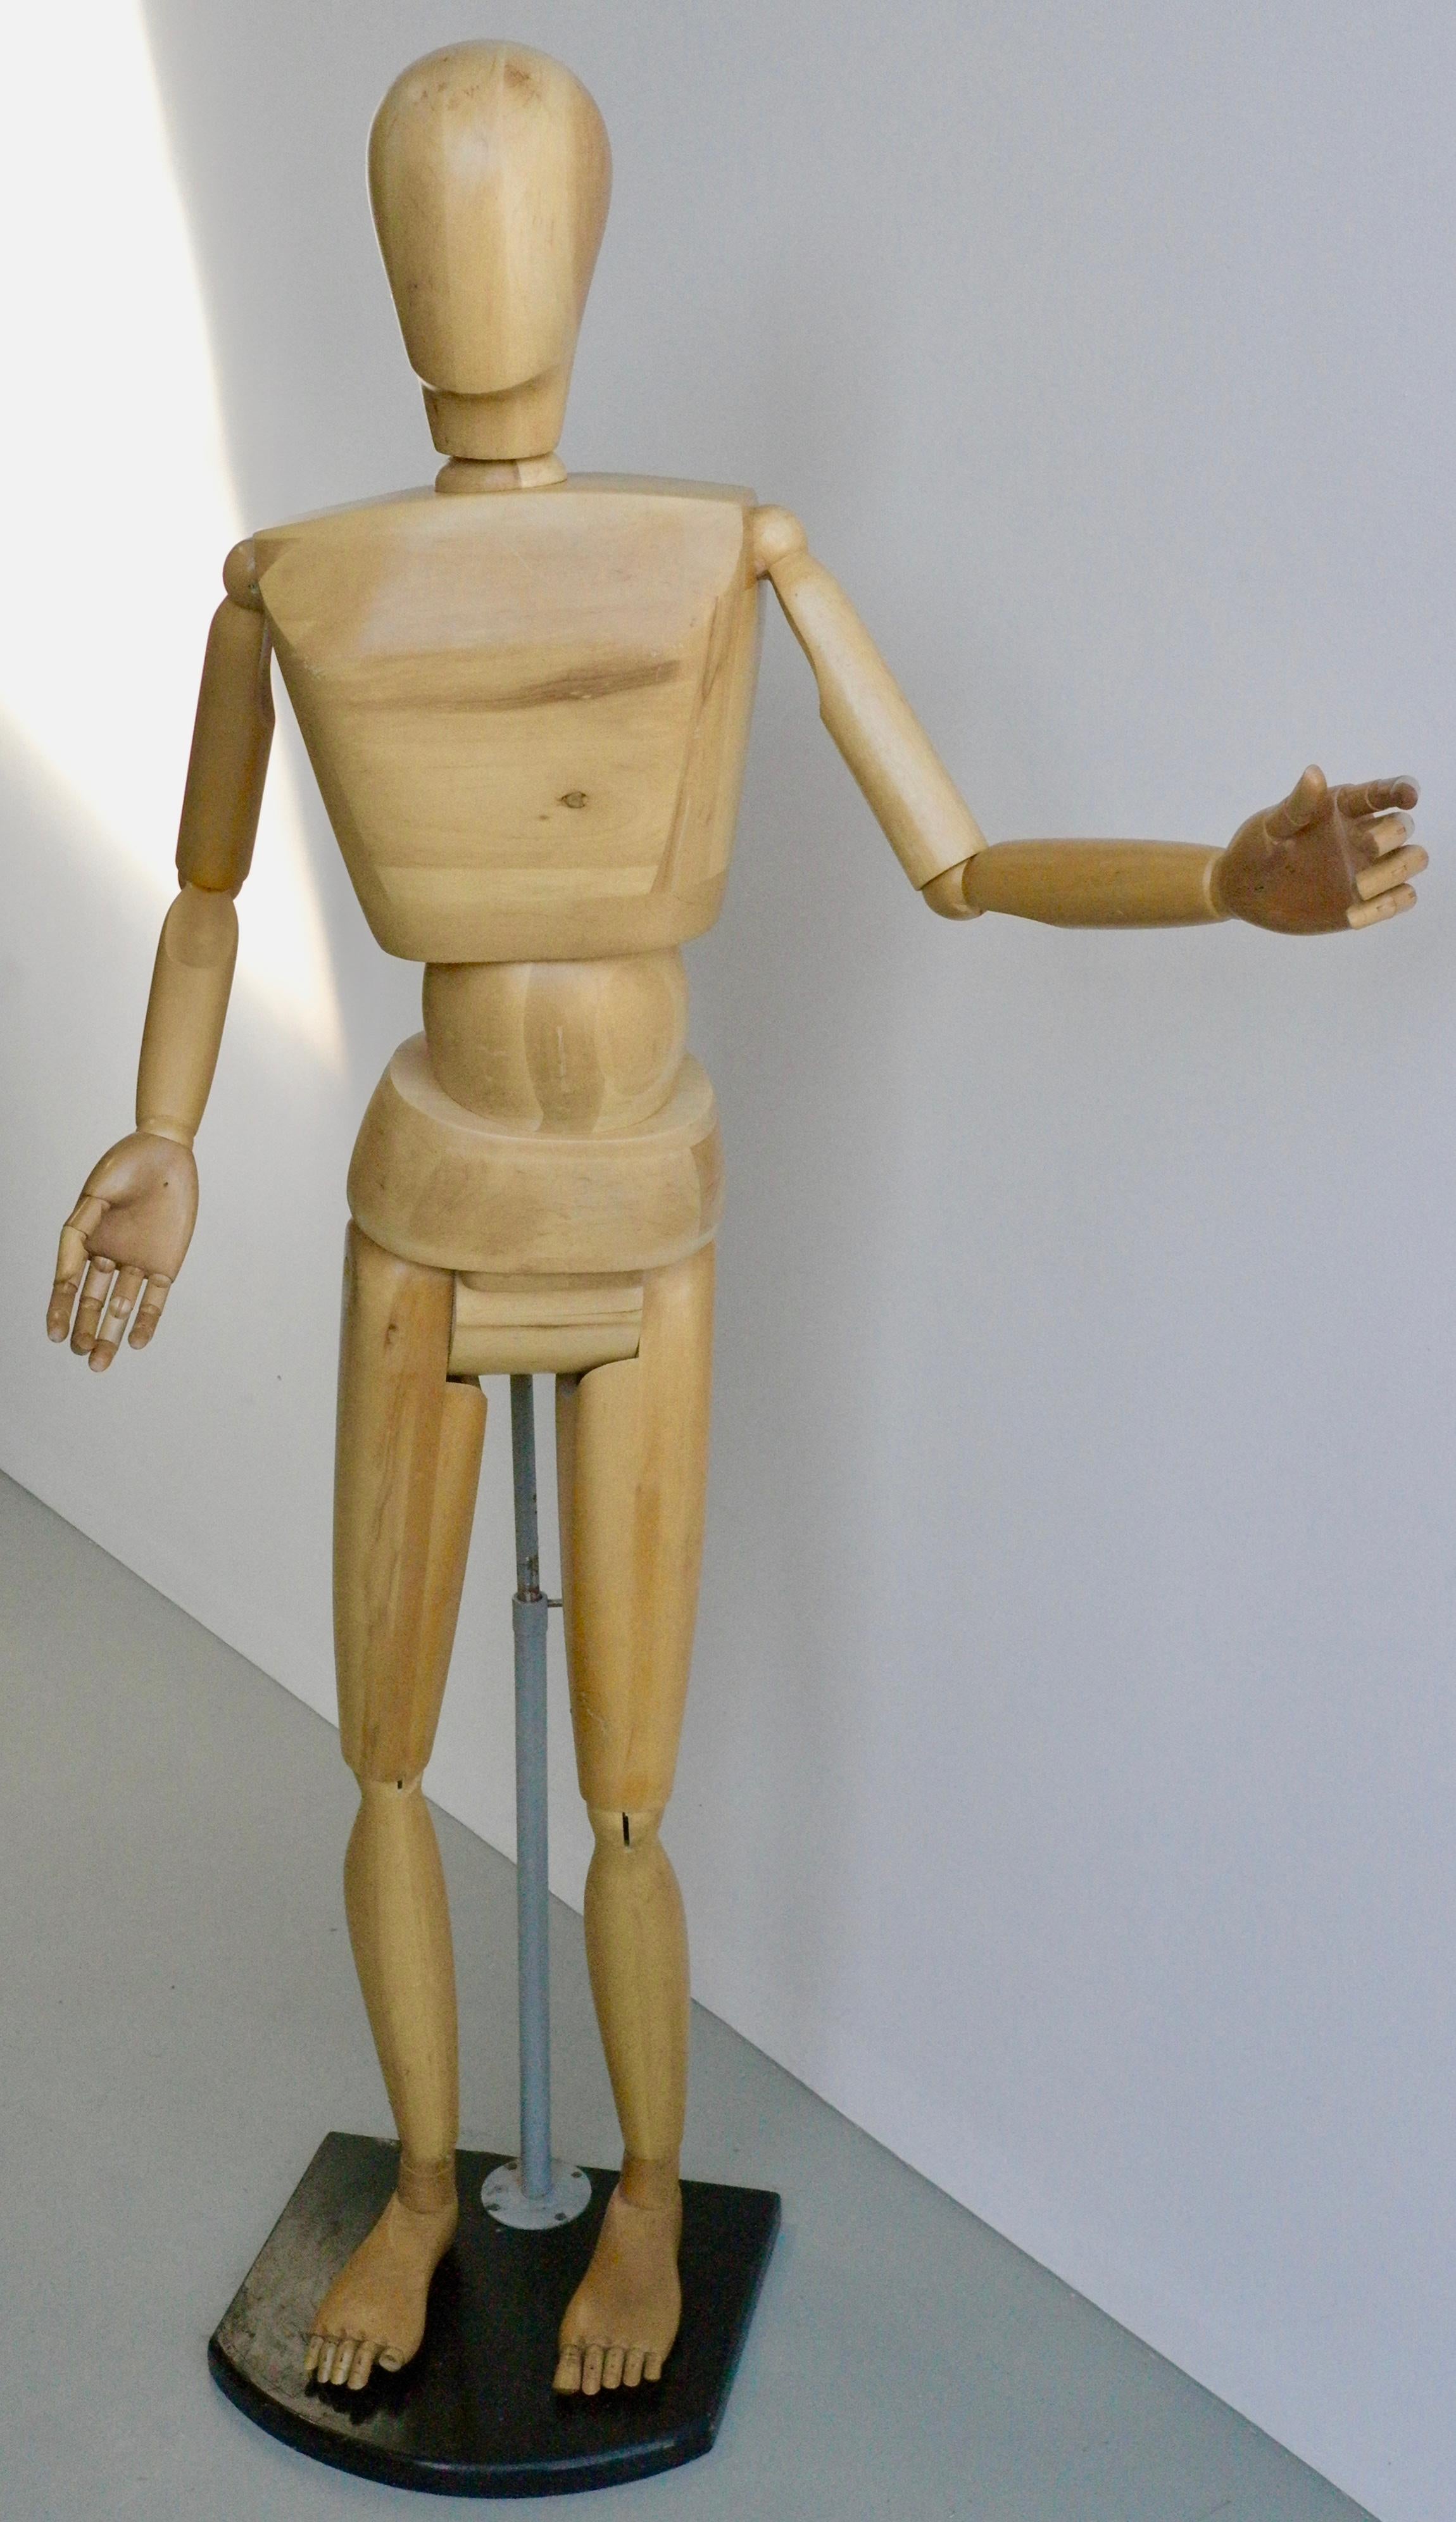 Real size wooden portraiture mannequin figurine, 1970s.